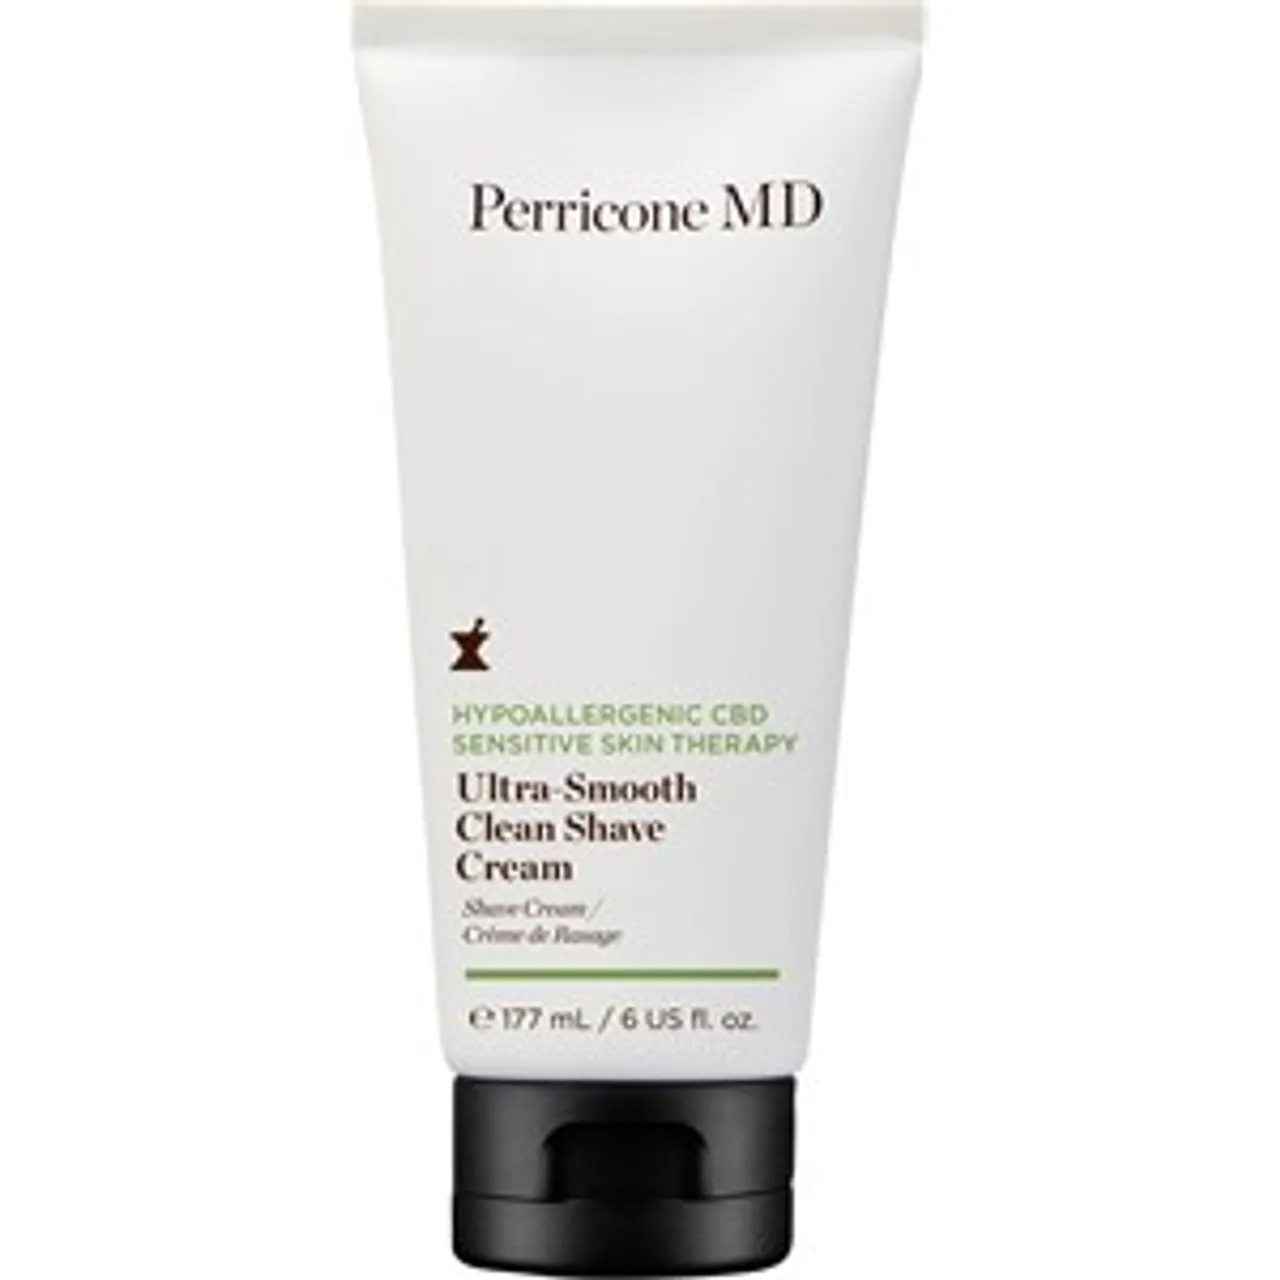 Perricone MD Hypoallergenic CBD Sensitive Skin Therapy Ultra-Smooth Clean Shave Cream Rasiercreme Herren